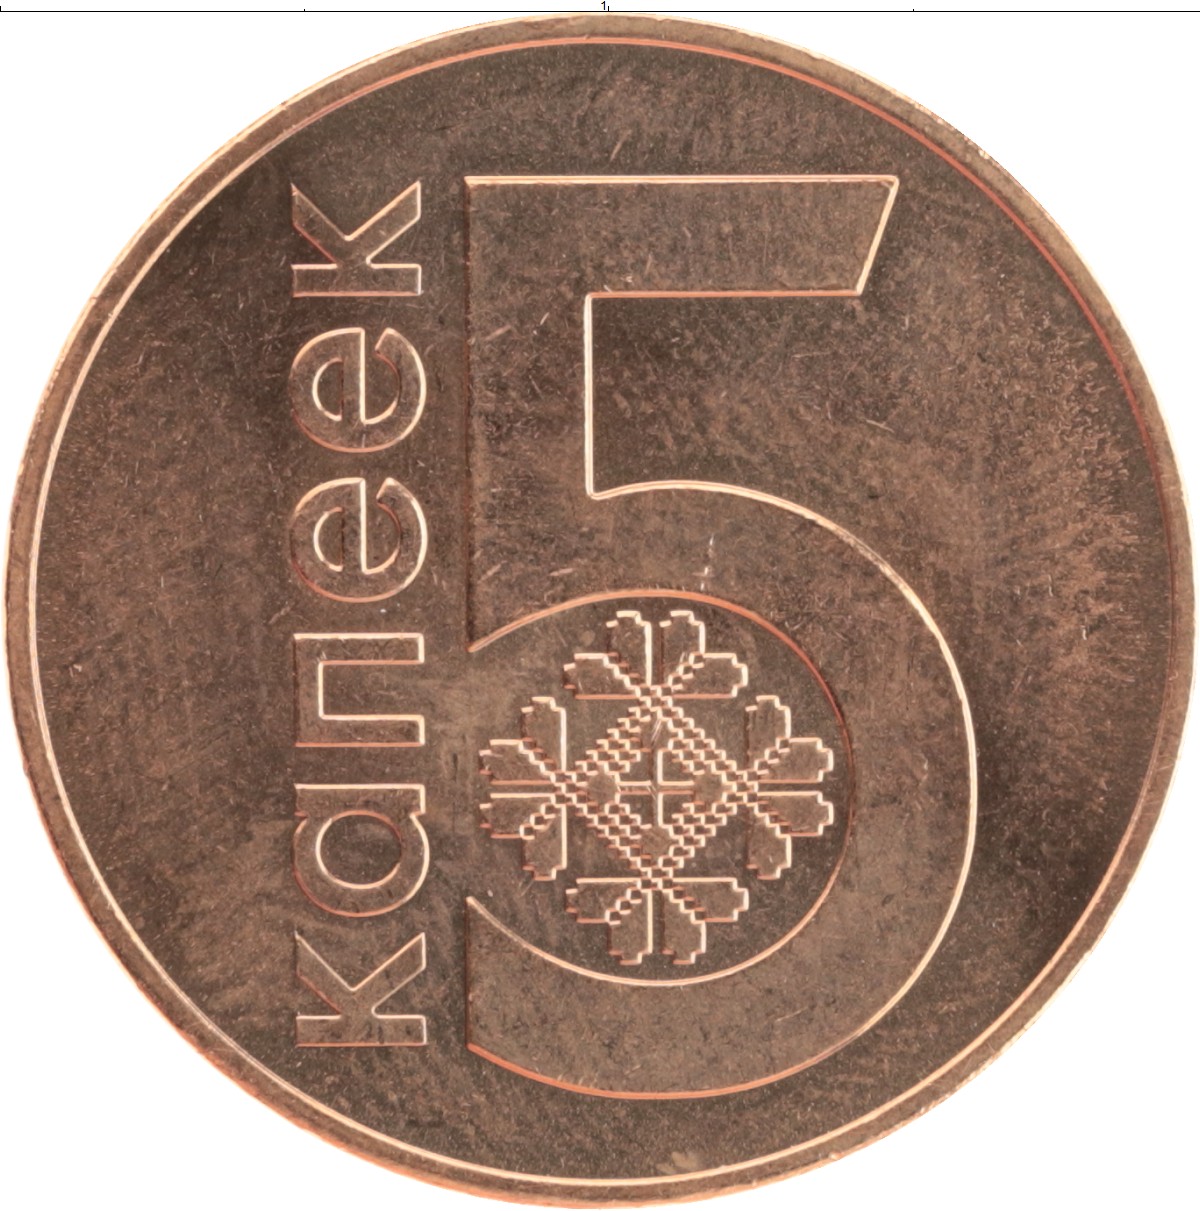 1 бел рубль в рублях. 5 Копеек 2009 Беларусь. Монета 50 копеек РБ. Белорусский рубль монета. Белорусские копейки.